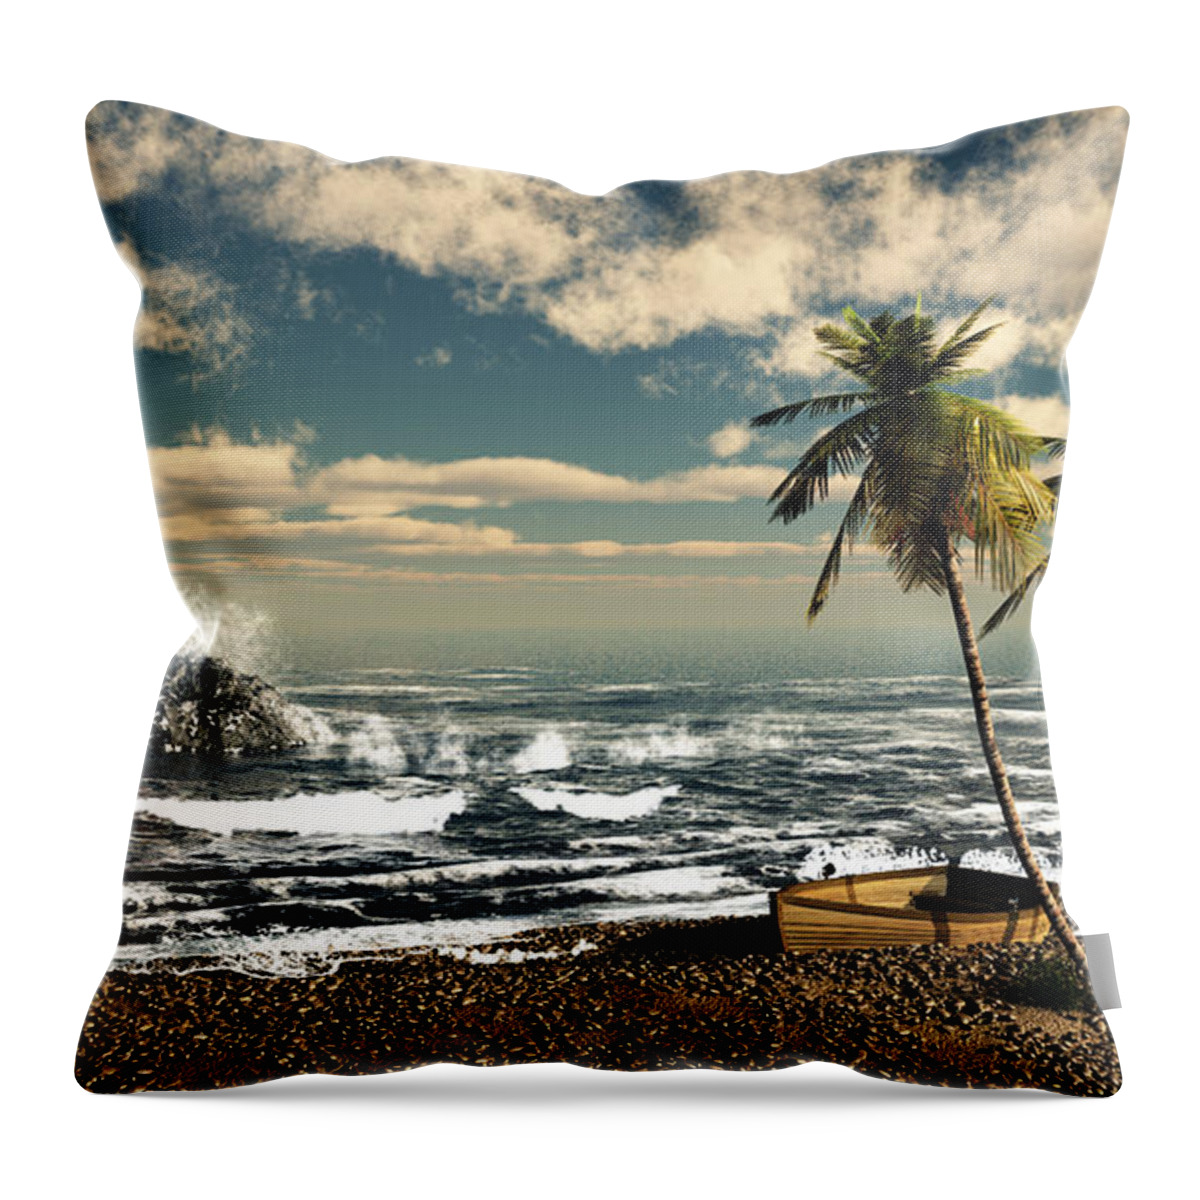  Sea Breeze Throw Pillow featuring the digital art Sea Breeze by John Junek